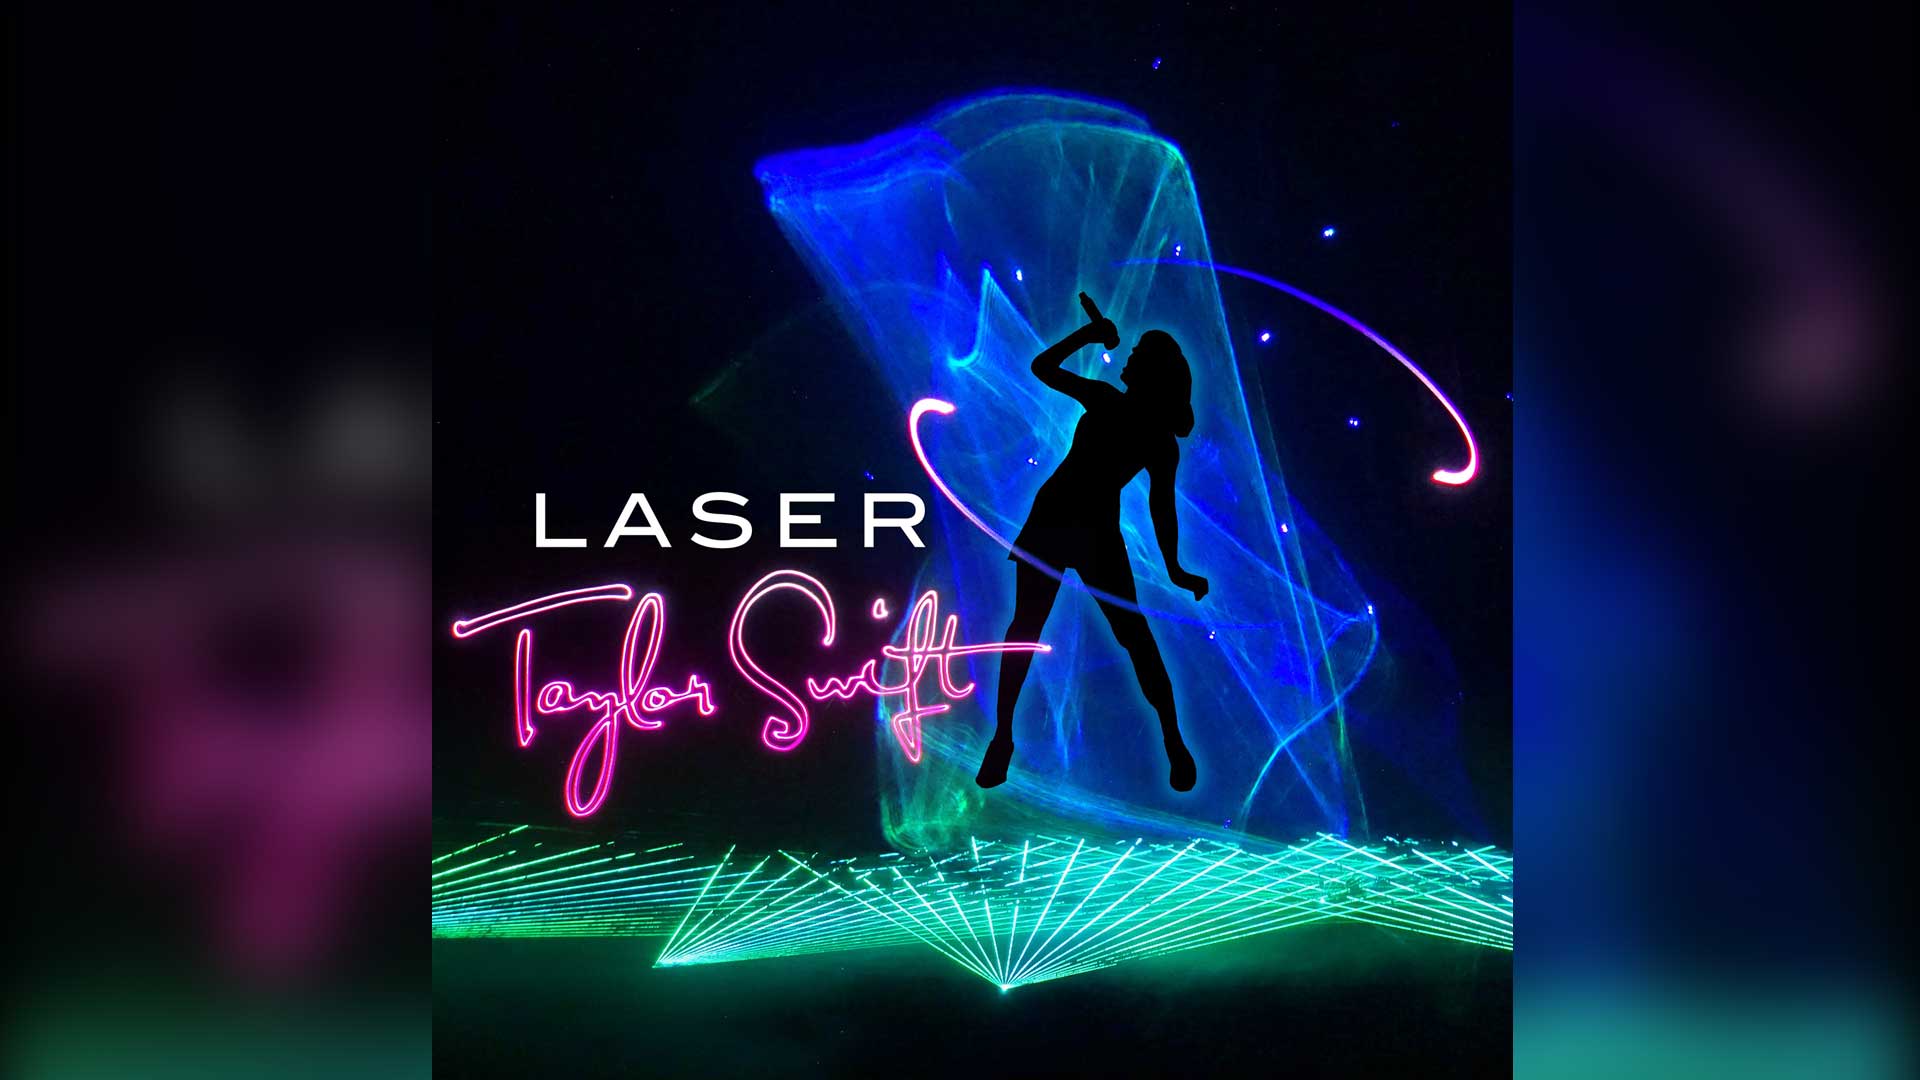 Laser Taylor Swift at MoSH